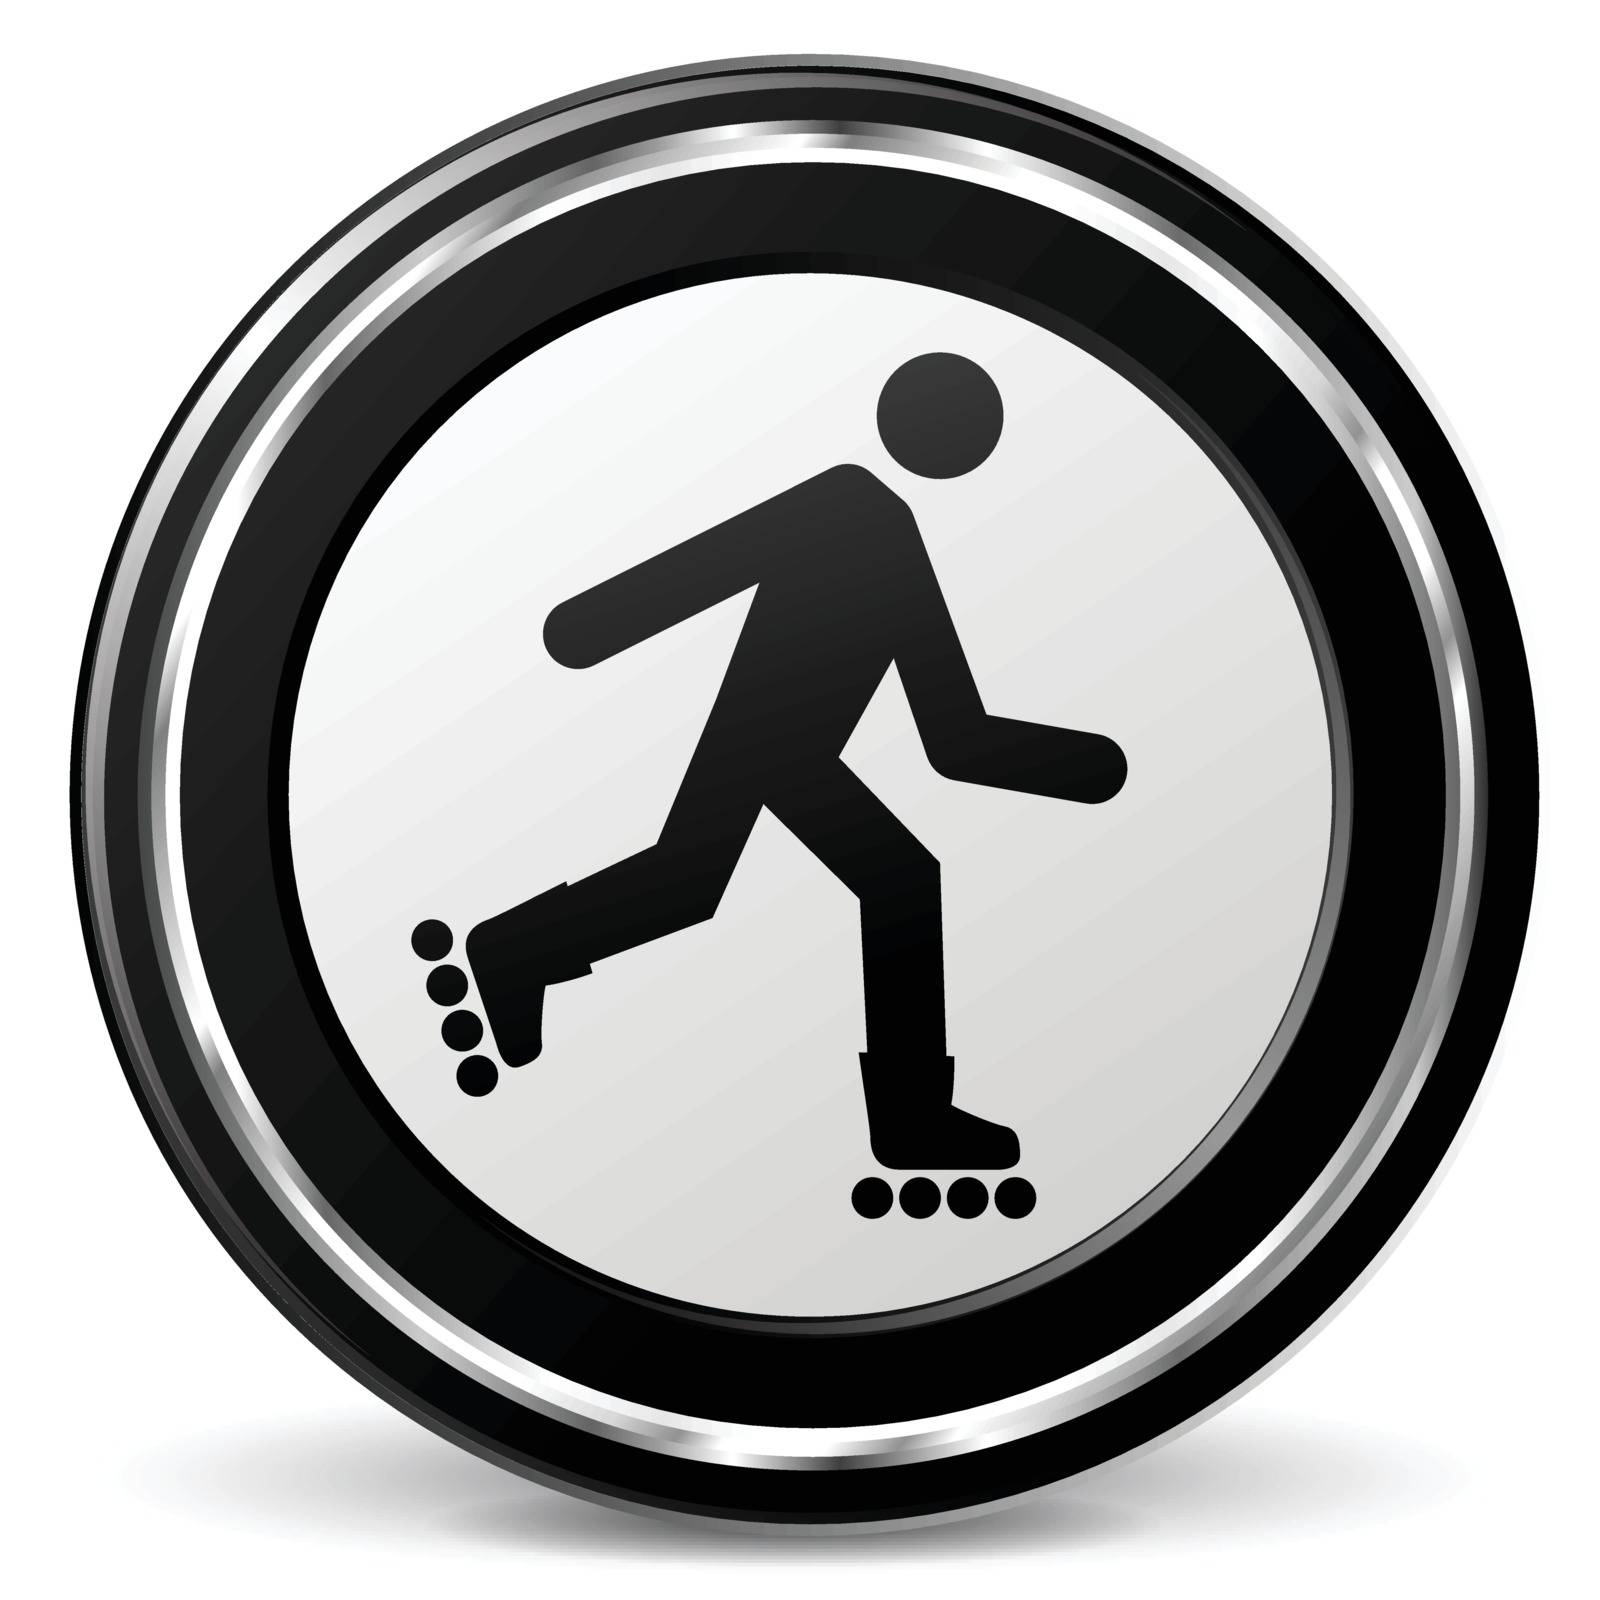 roller skate icon by nickylarson974